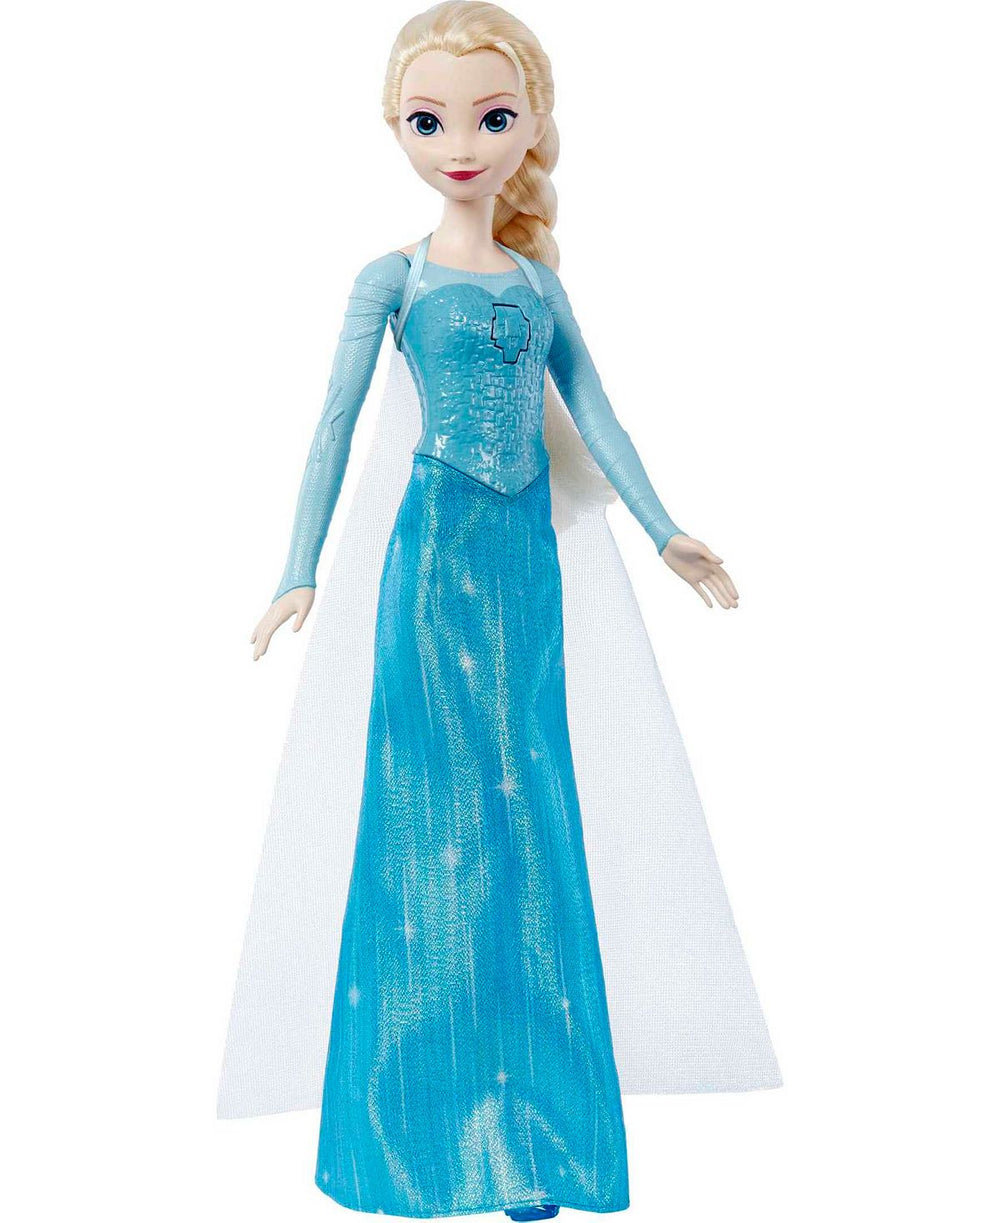 Disney Princess Frozen Singing Elsa Doll - Classic Blue Outfit